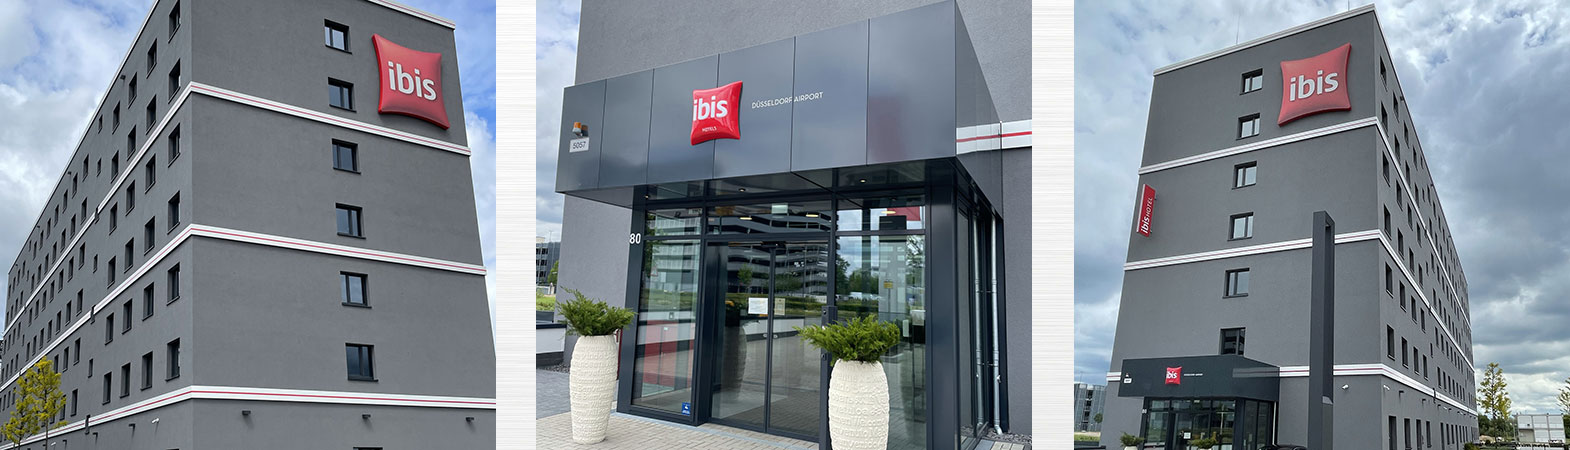 IBIS, Düsseldorf